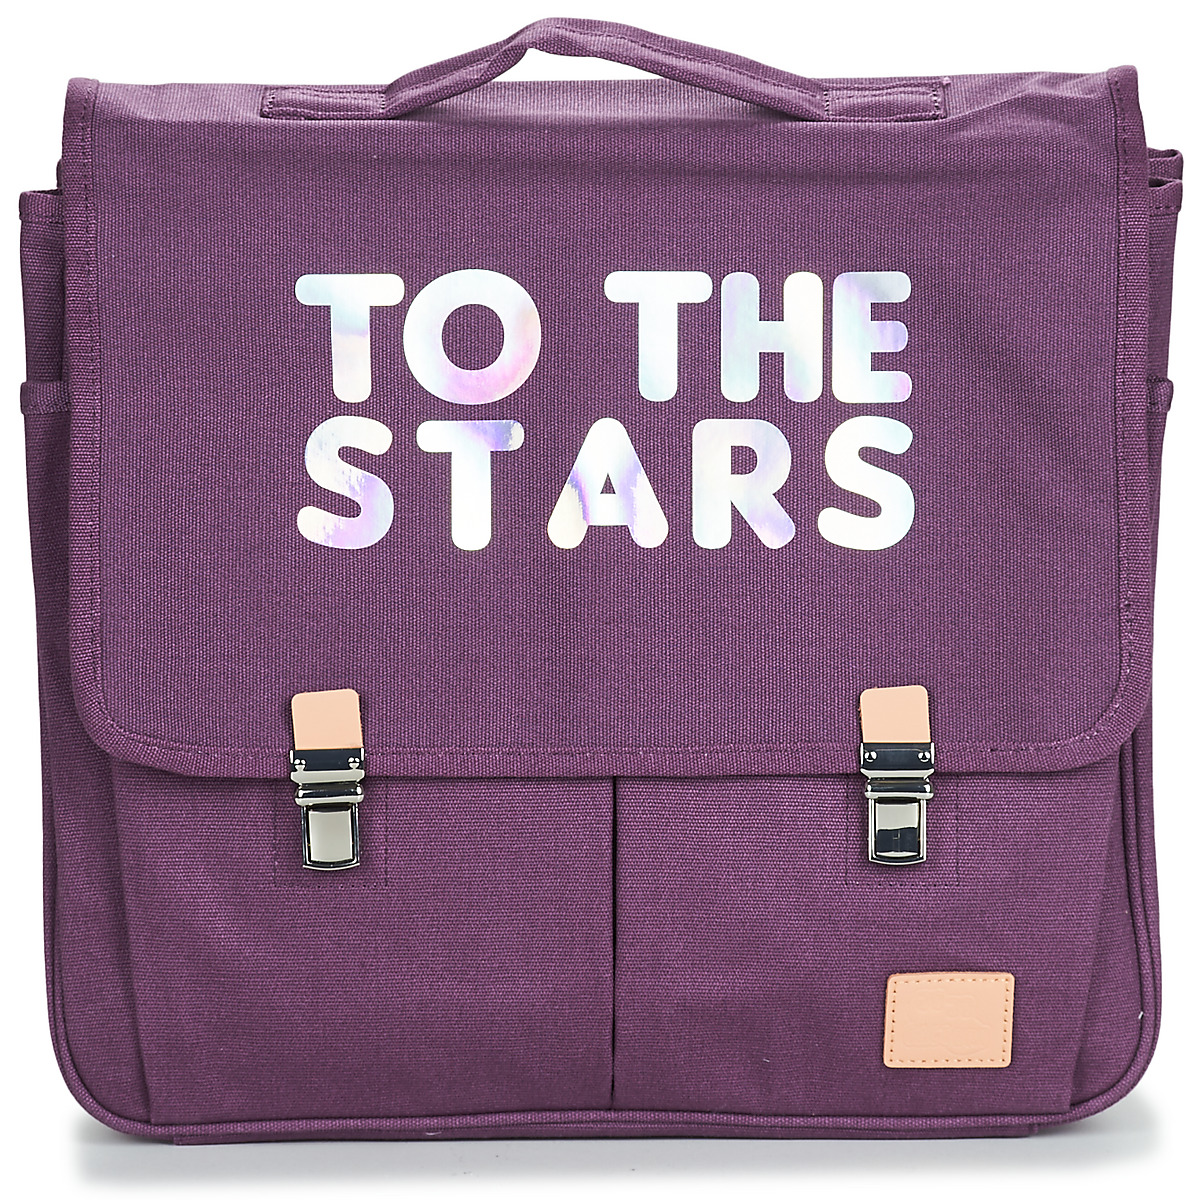 Tašky Dievča Školské tašky a aktovky Jojo Factory CARTABLE UNI TO THE STARS Bordová